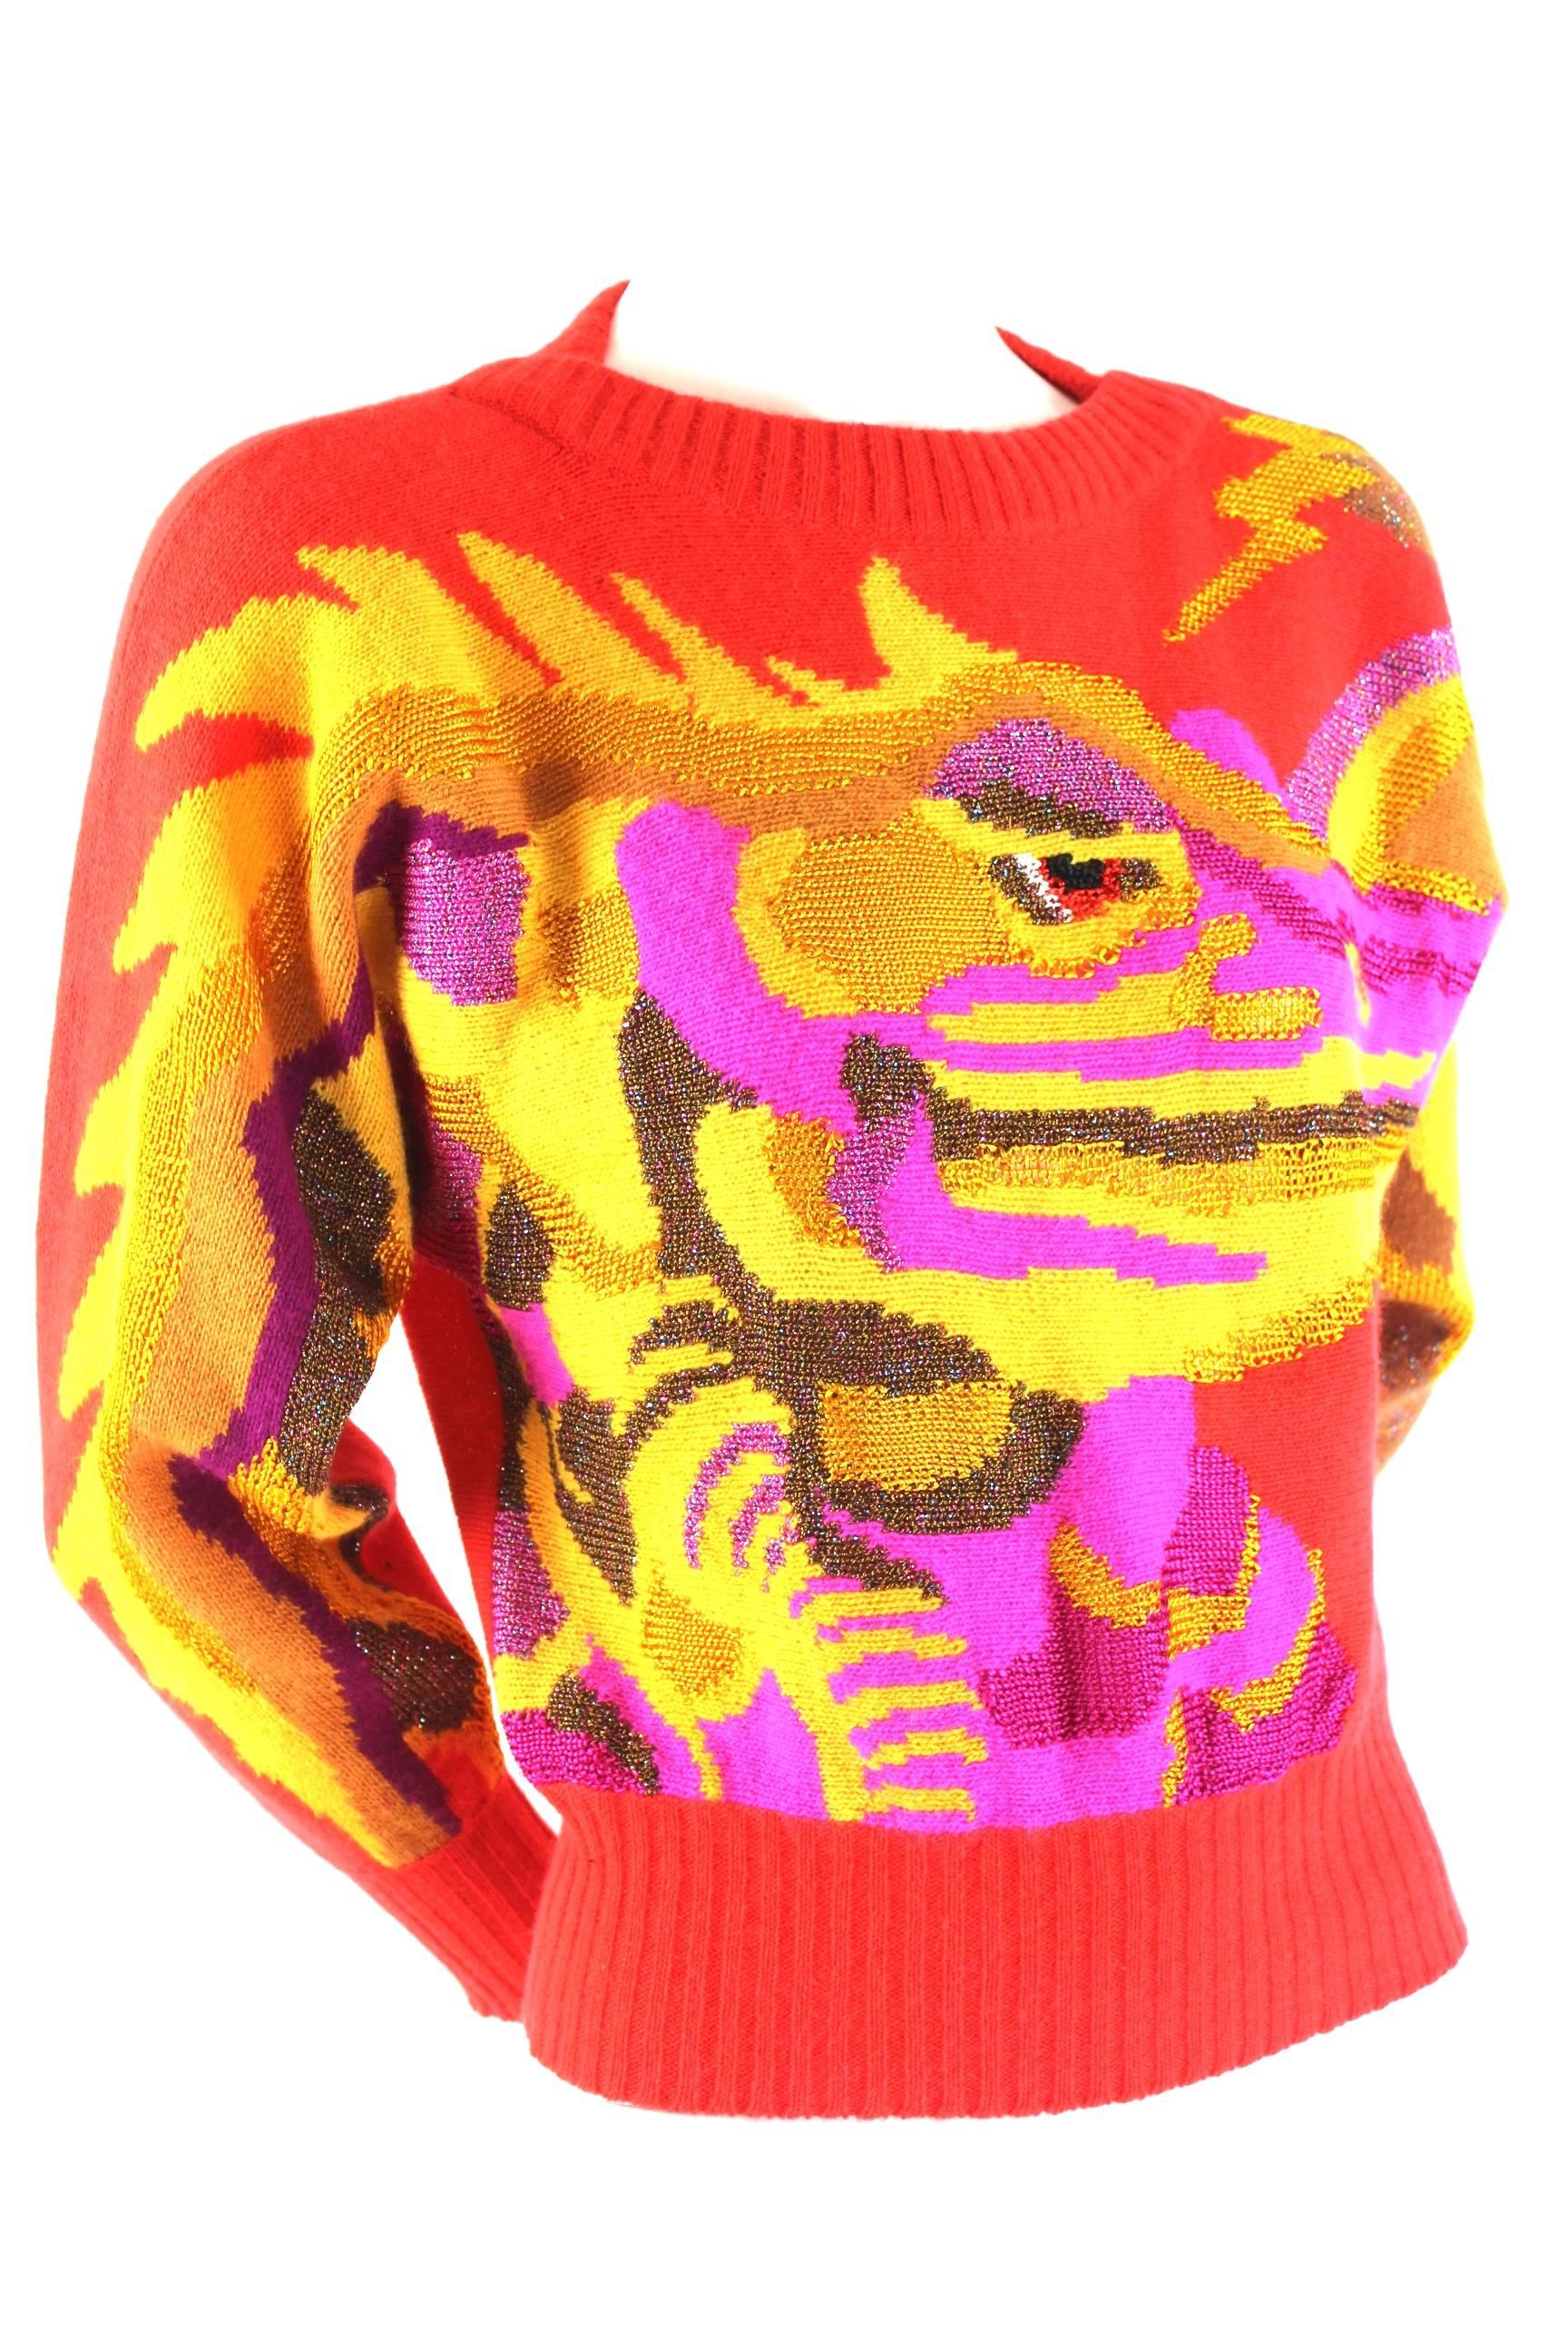 1980s Krizia Maglia Animal Series Knit Dragon Sweater
Angora, Wool and Rayon
No size Label